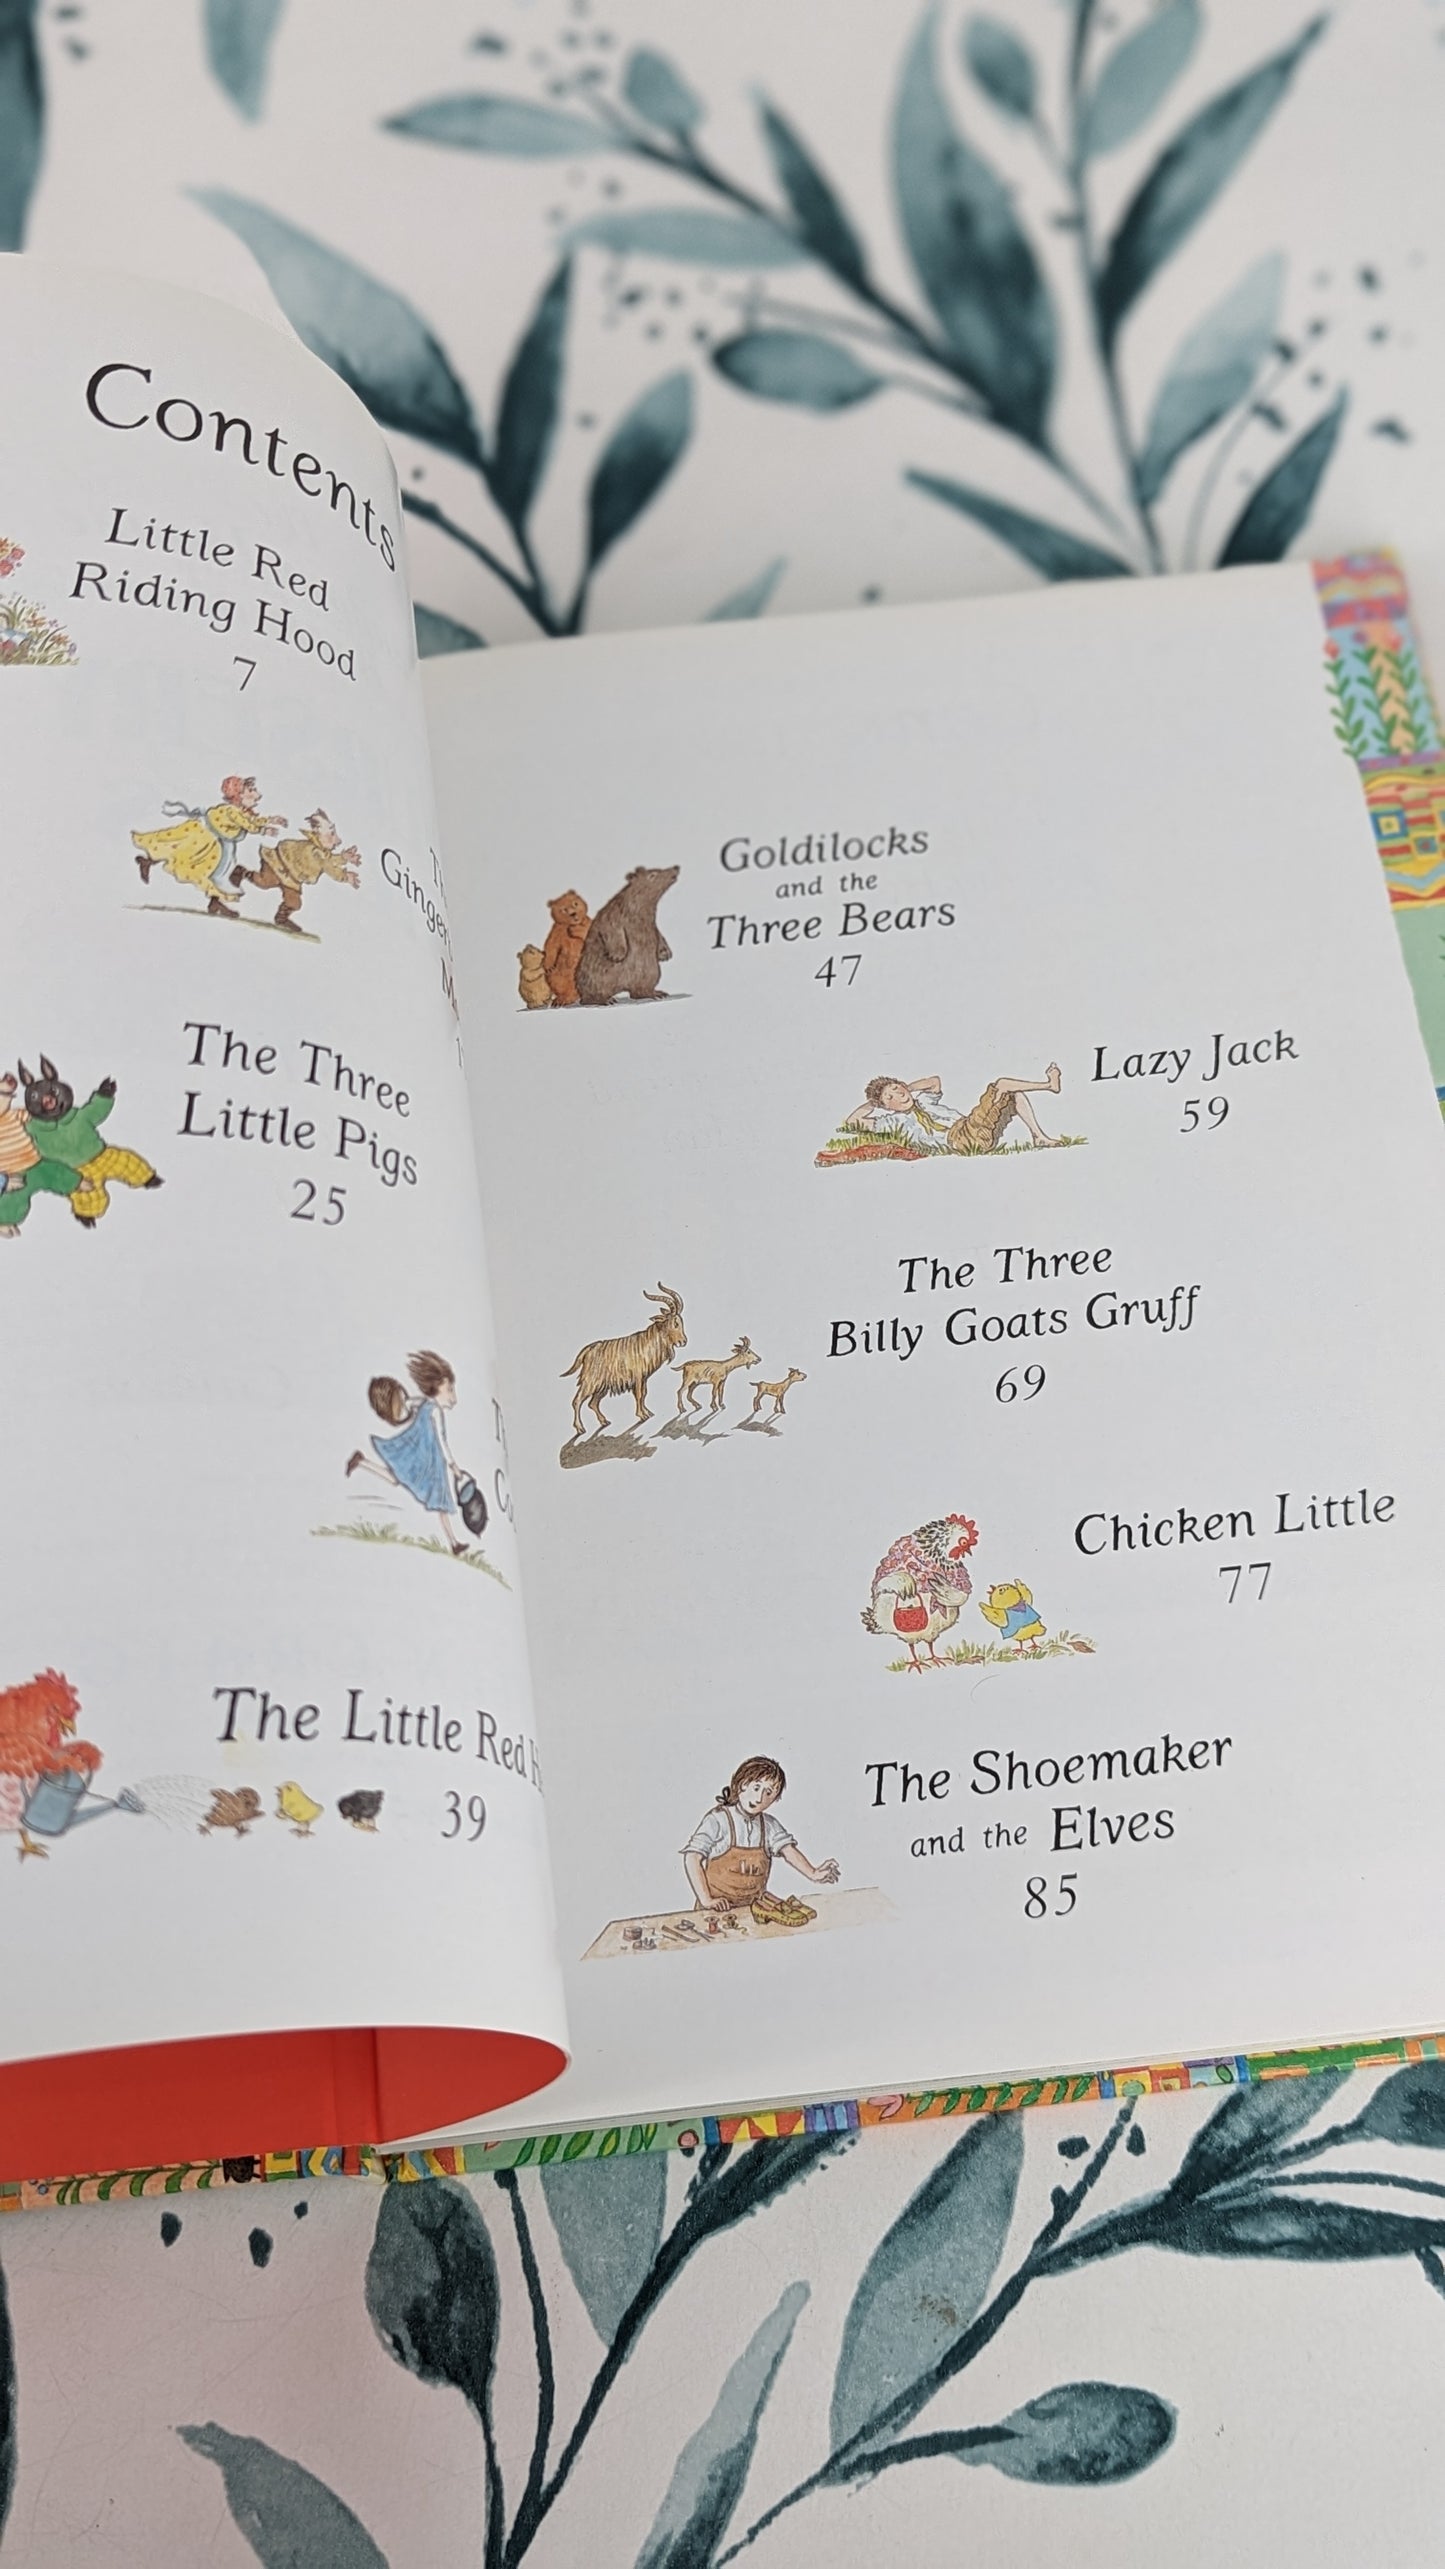 The Random House Book of Nursery Stories